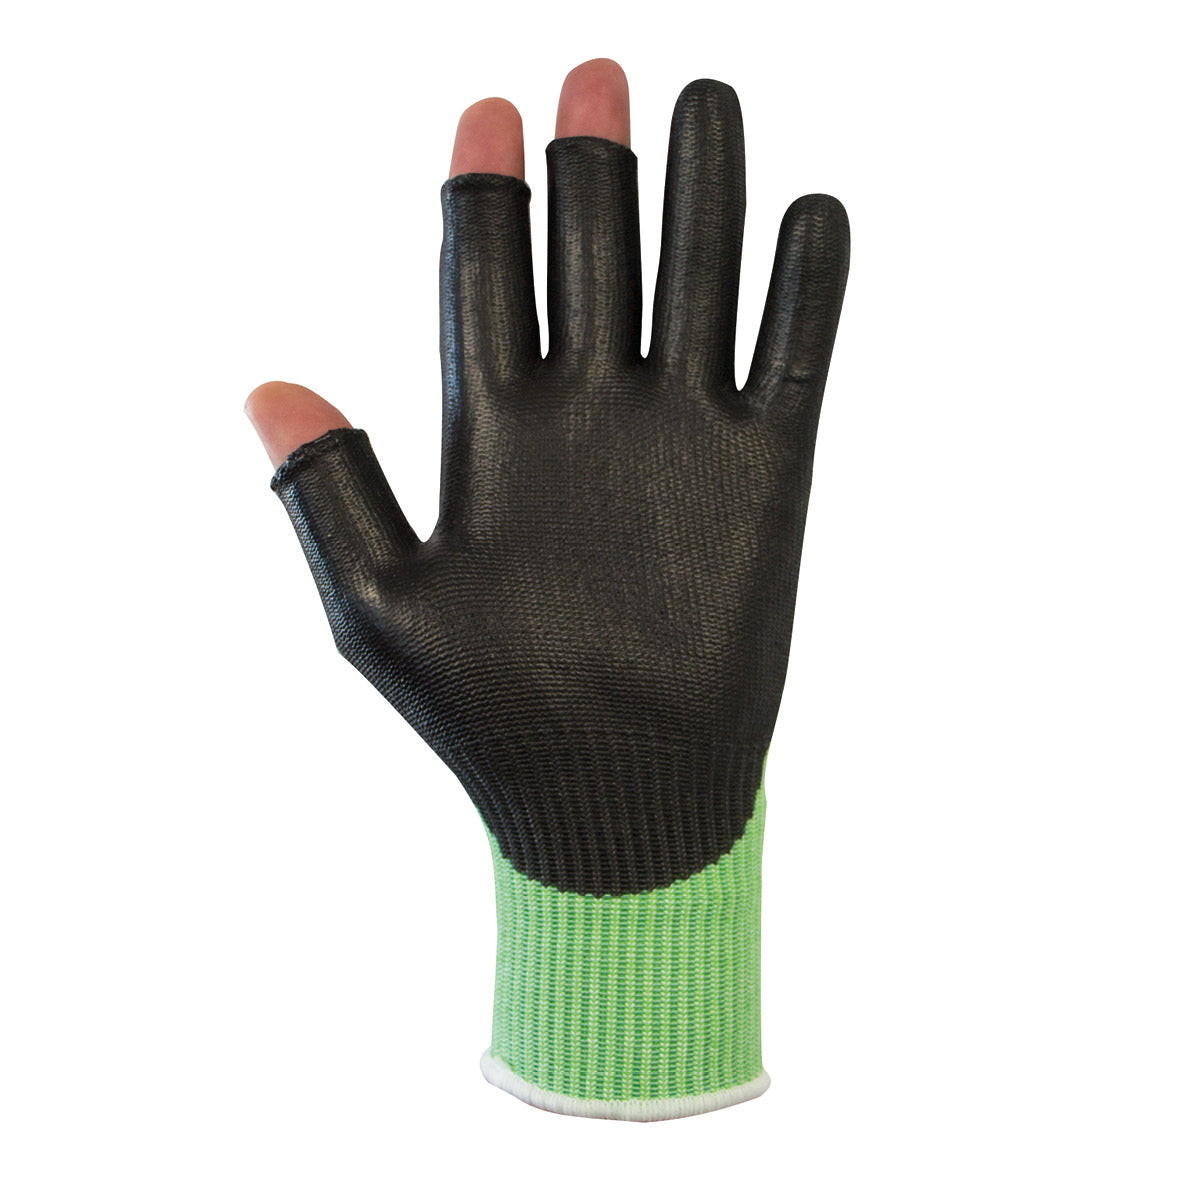 X-Dura 3 Digit PU Cut Level C Safety Glove